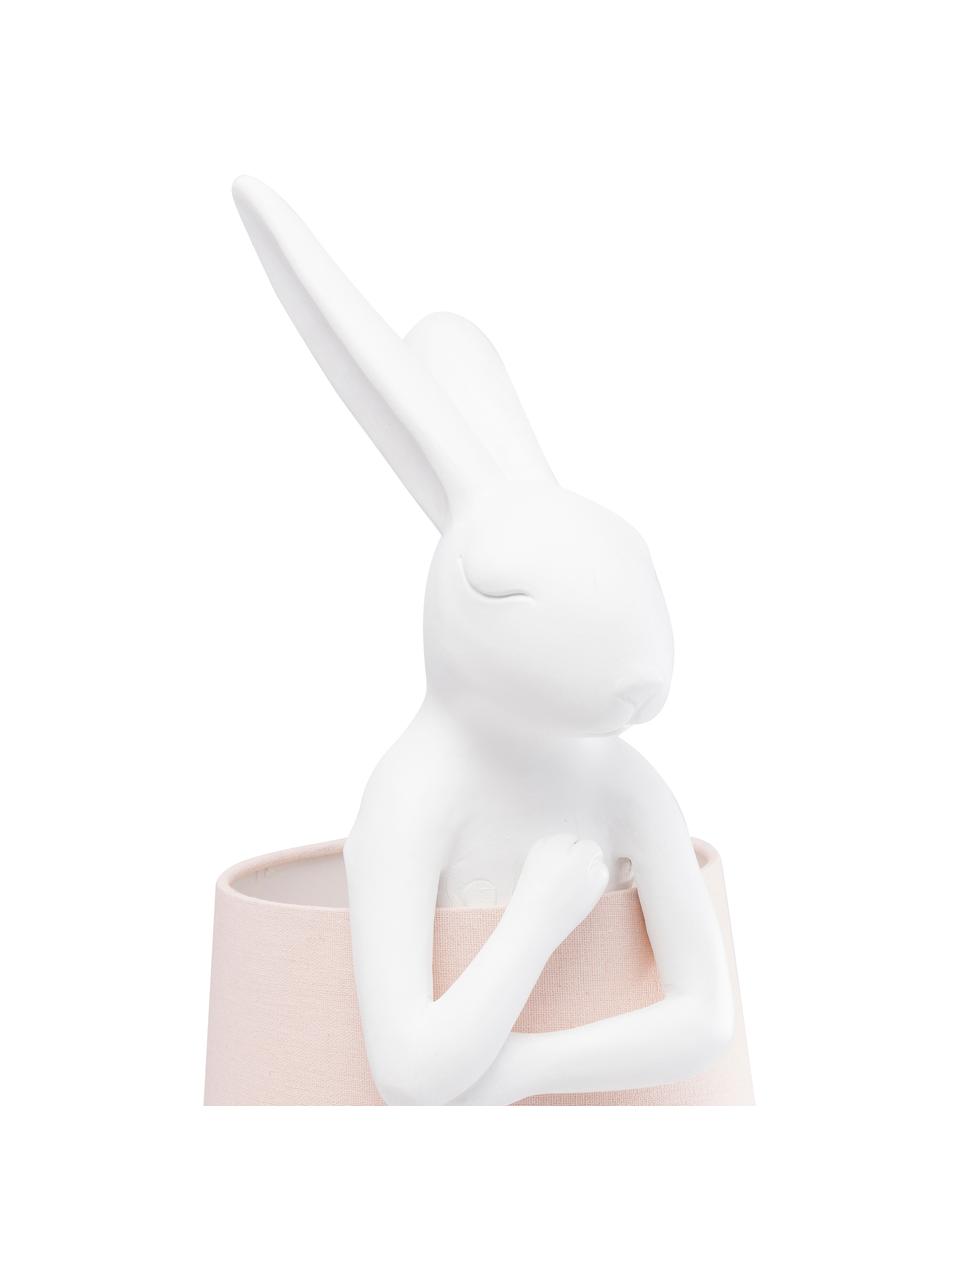 Grande lampe à poser design Rabbit, Blanc, rose, Ø 23 x haut. 68 cm